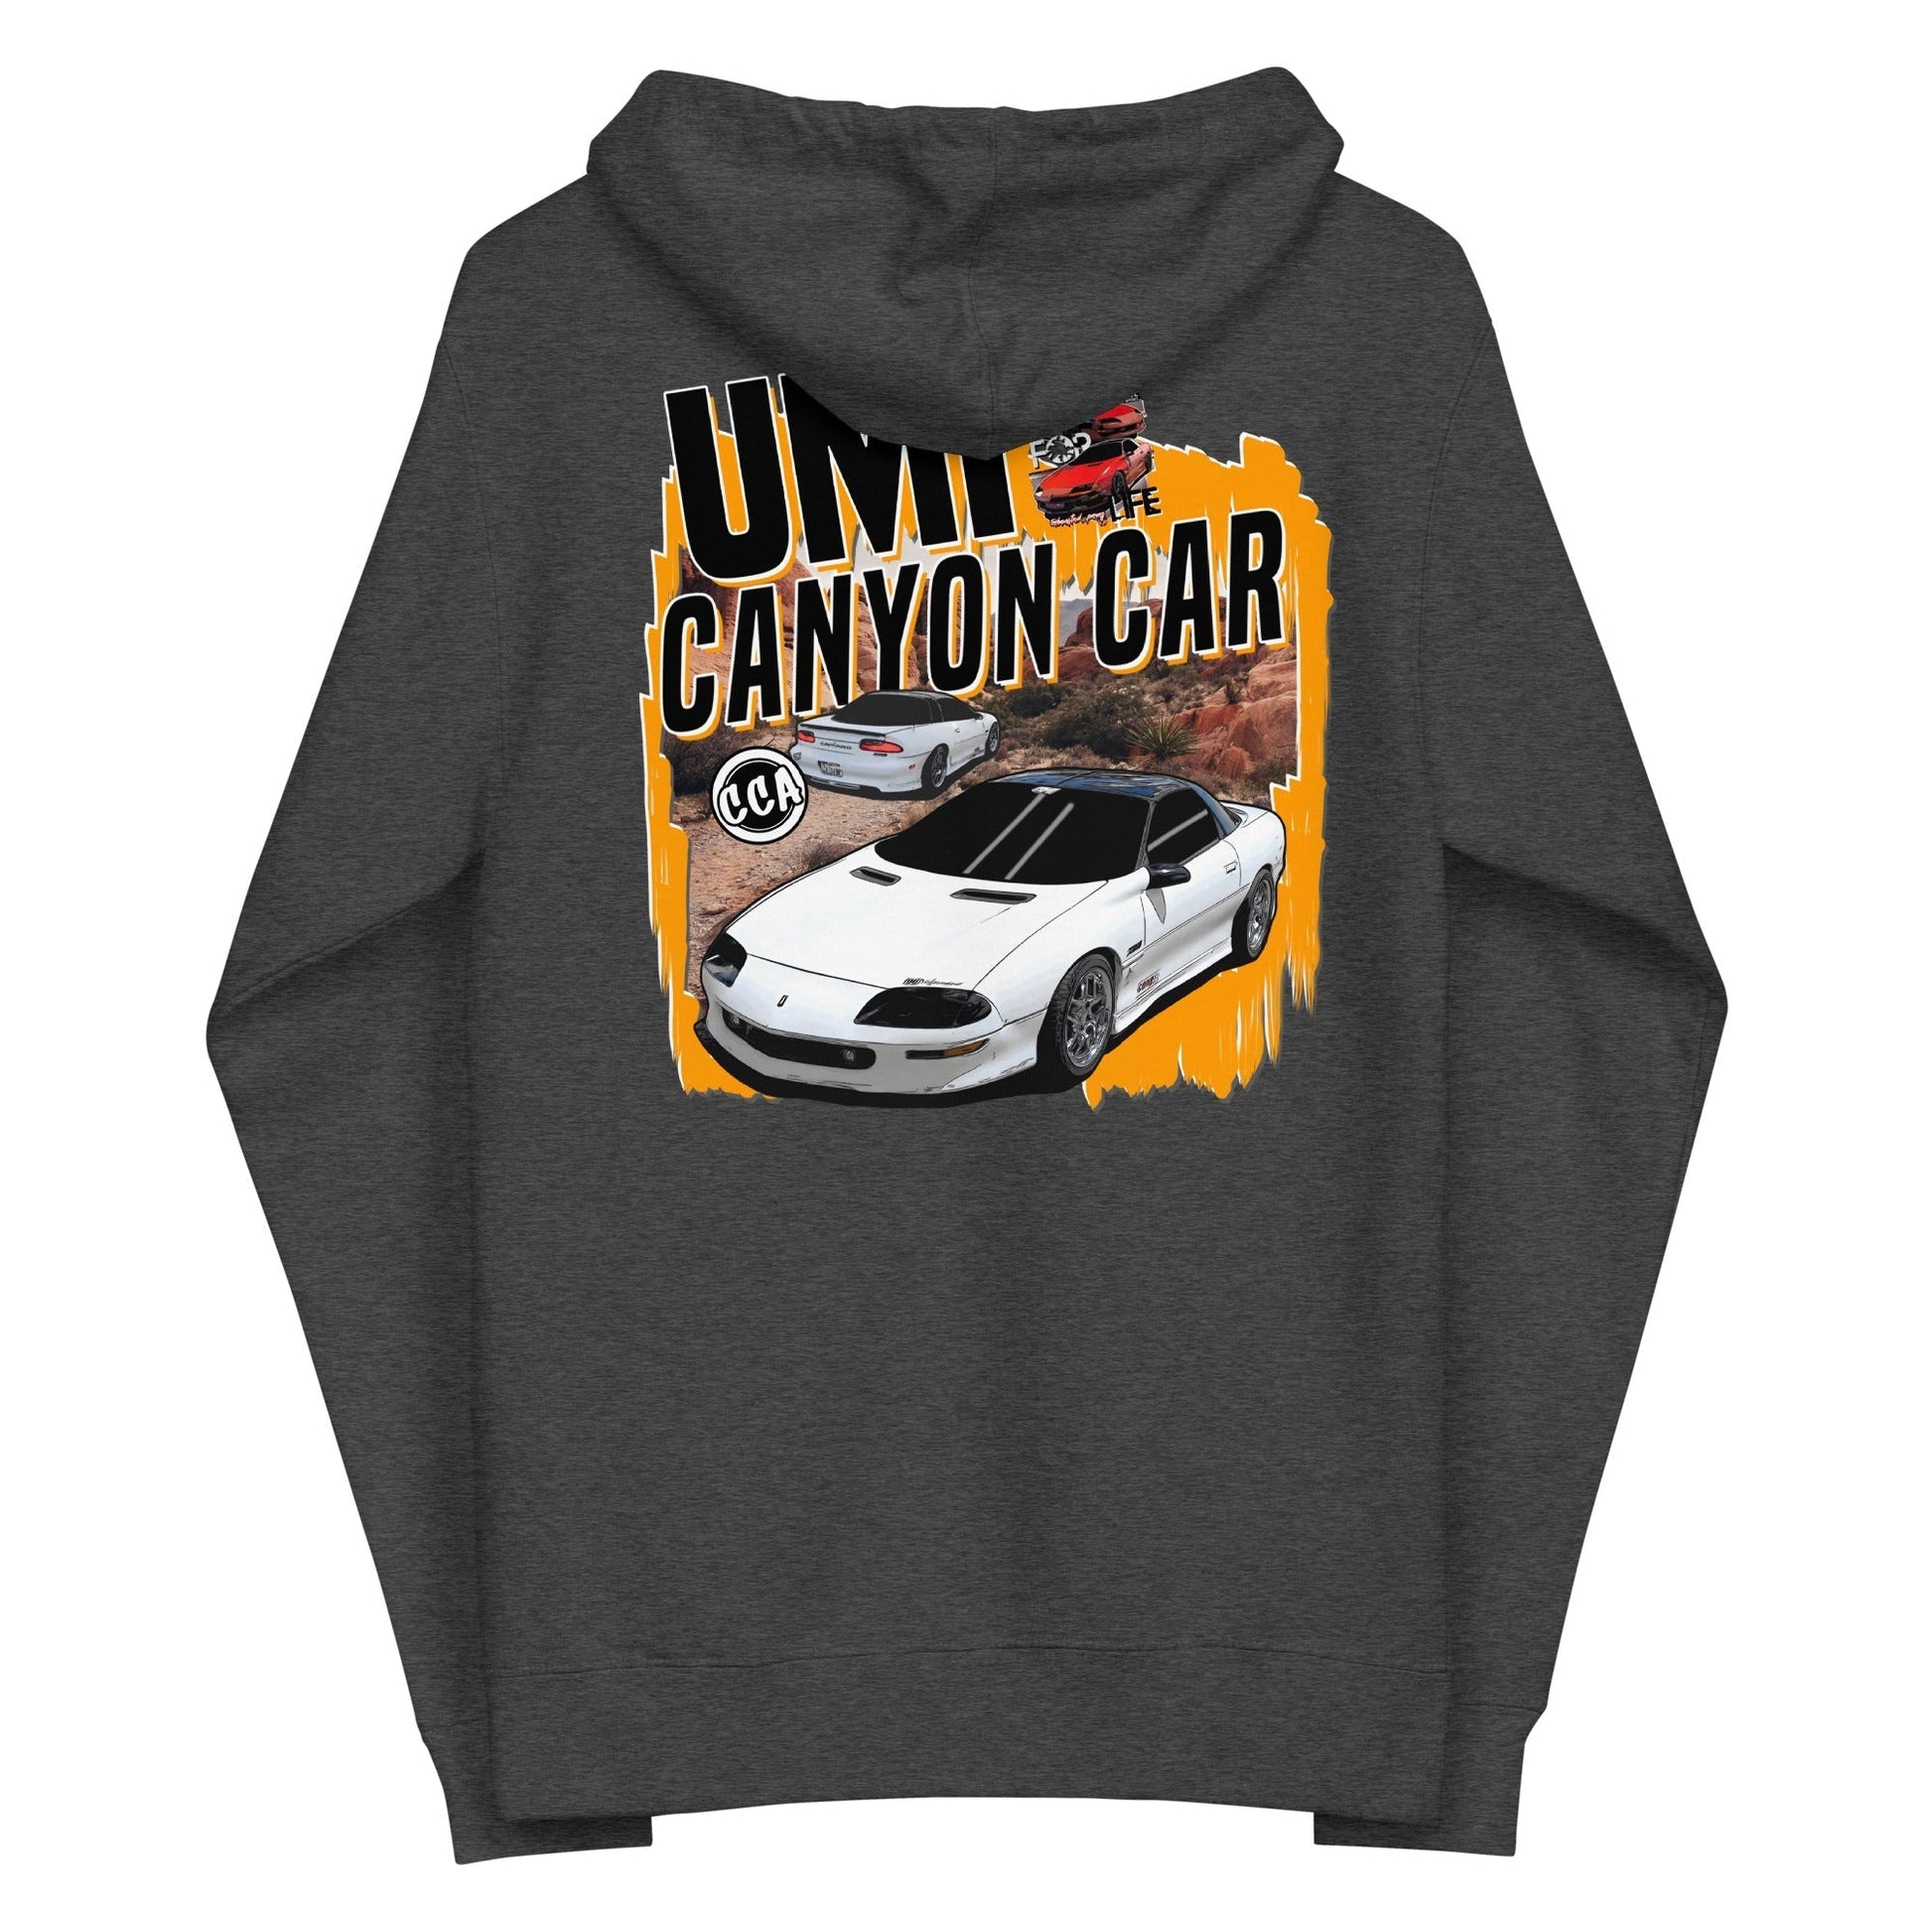 UMI Canyon Car Zip Up Hoodie